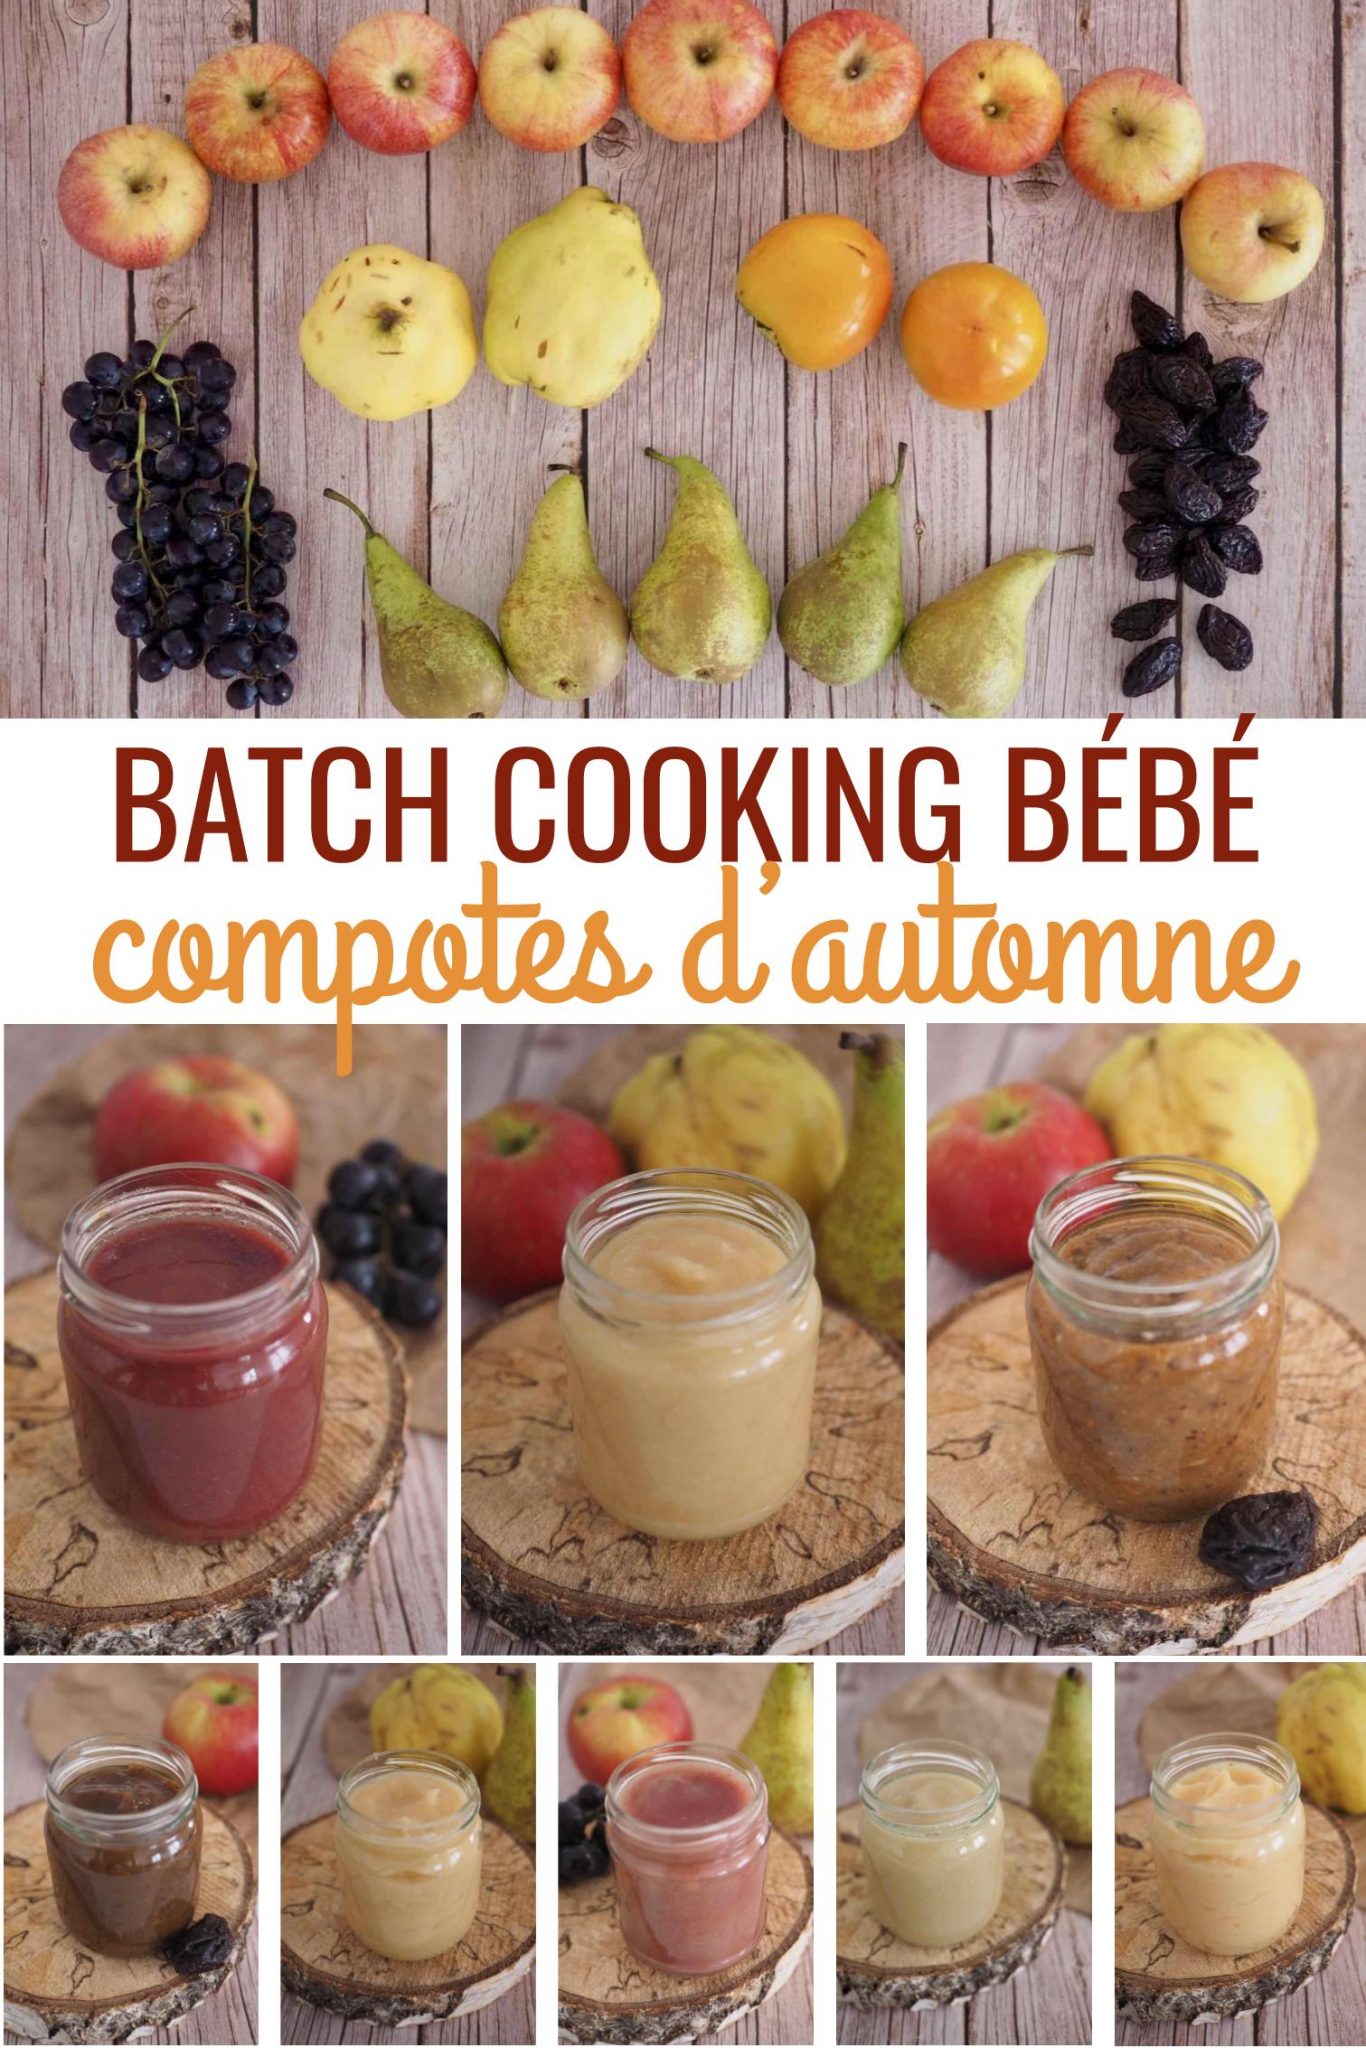 Batch Cooking - Compotes d'automne